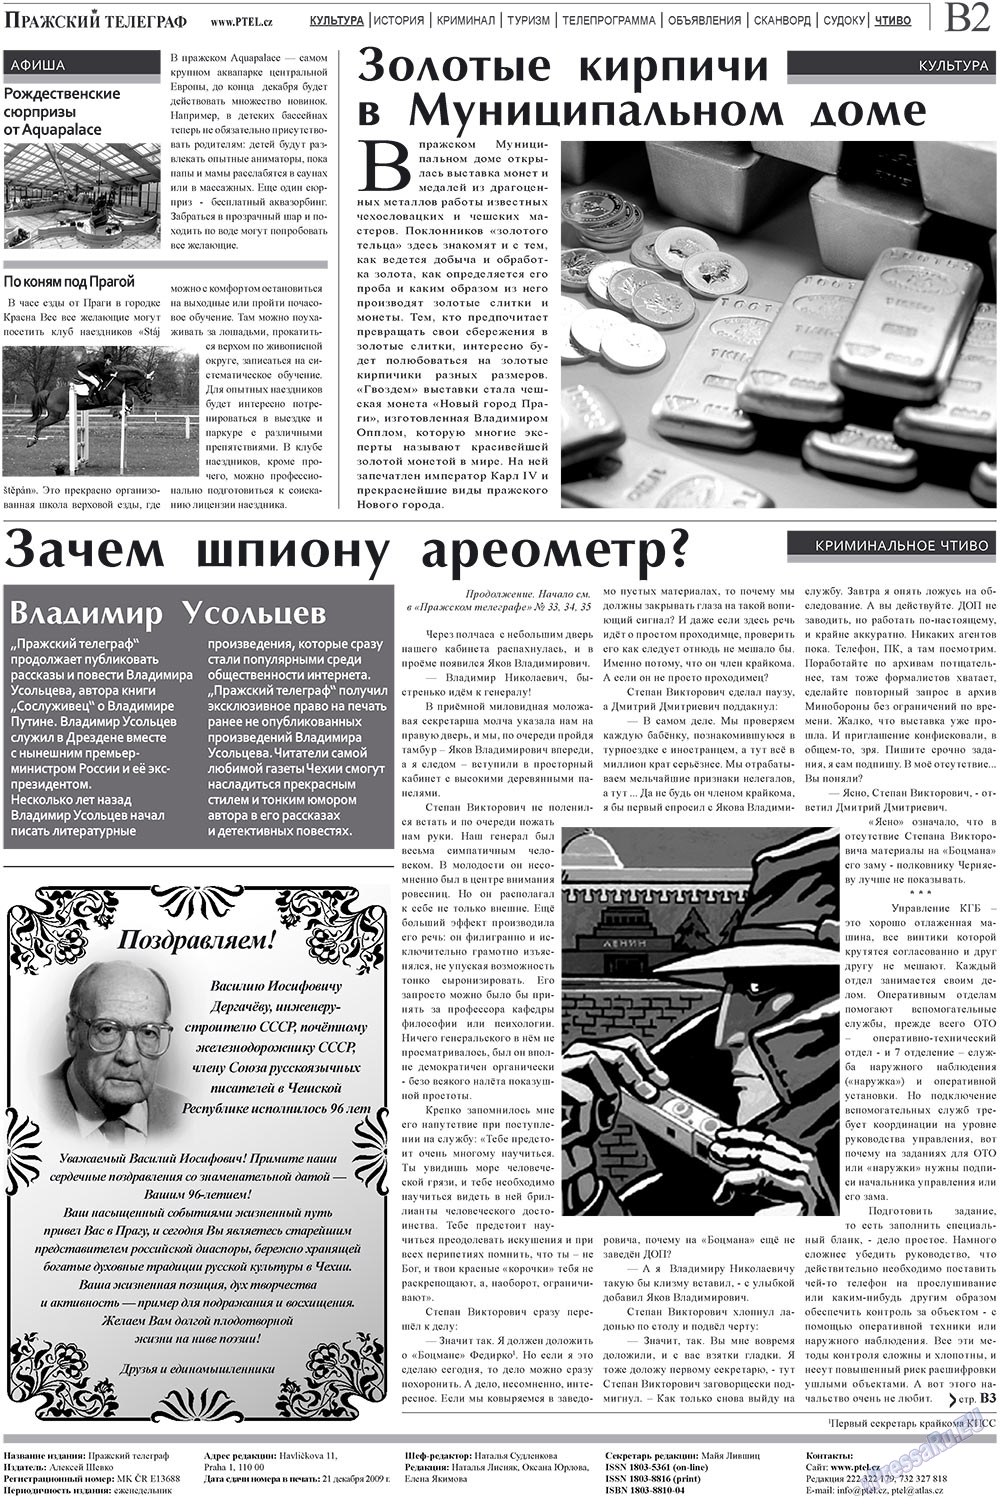 Пражский телеграф, газета. 2009 №36 стр.10